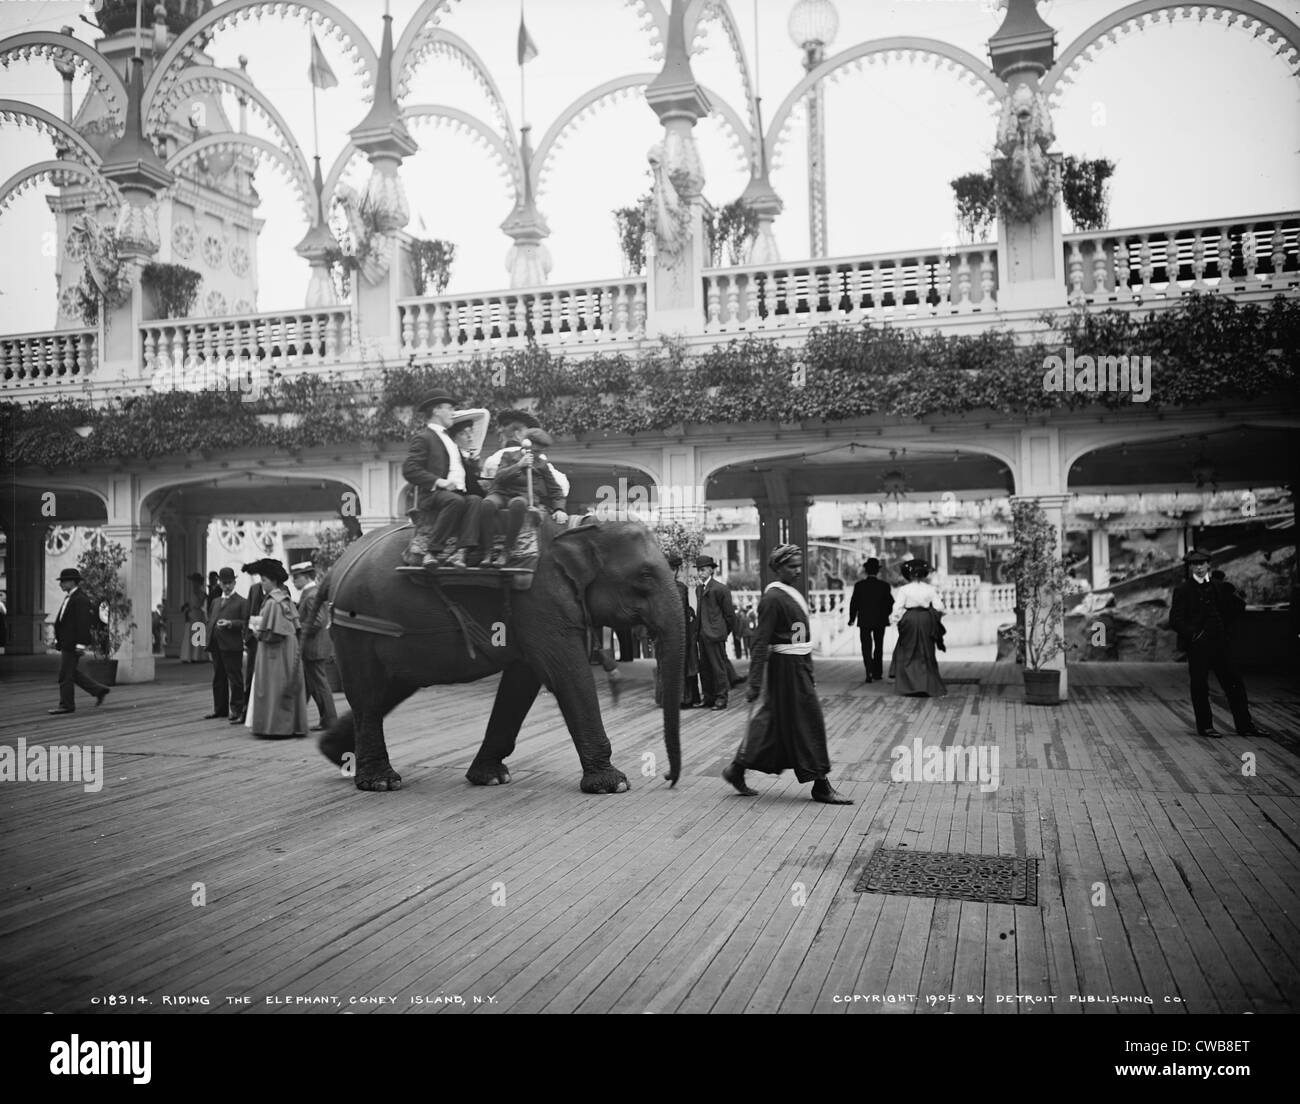 Riding an elephant in Coney Island, New York City, 1905 Stock Photo